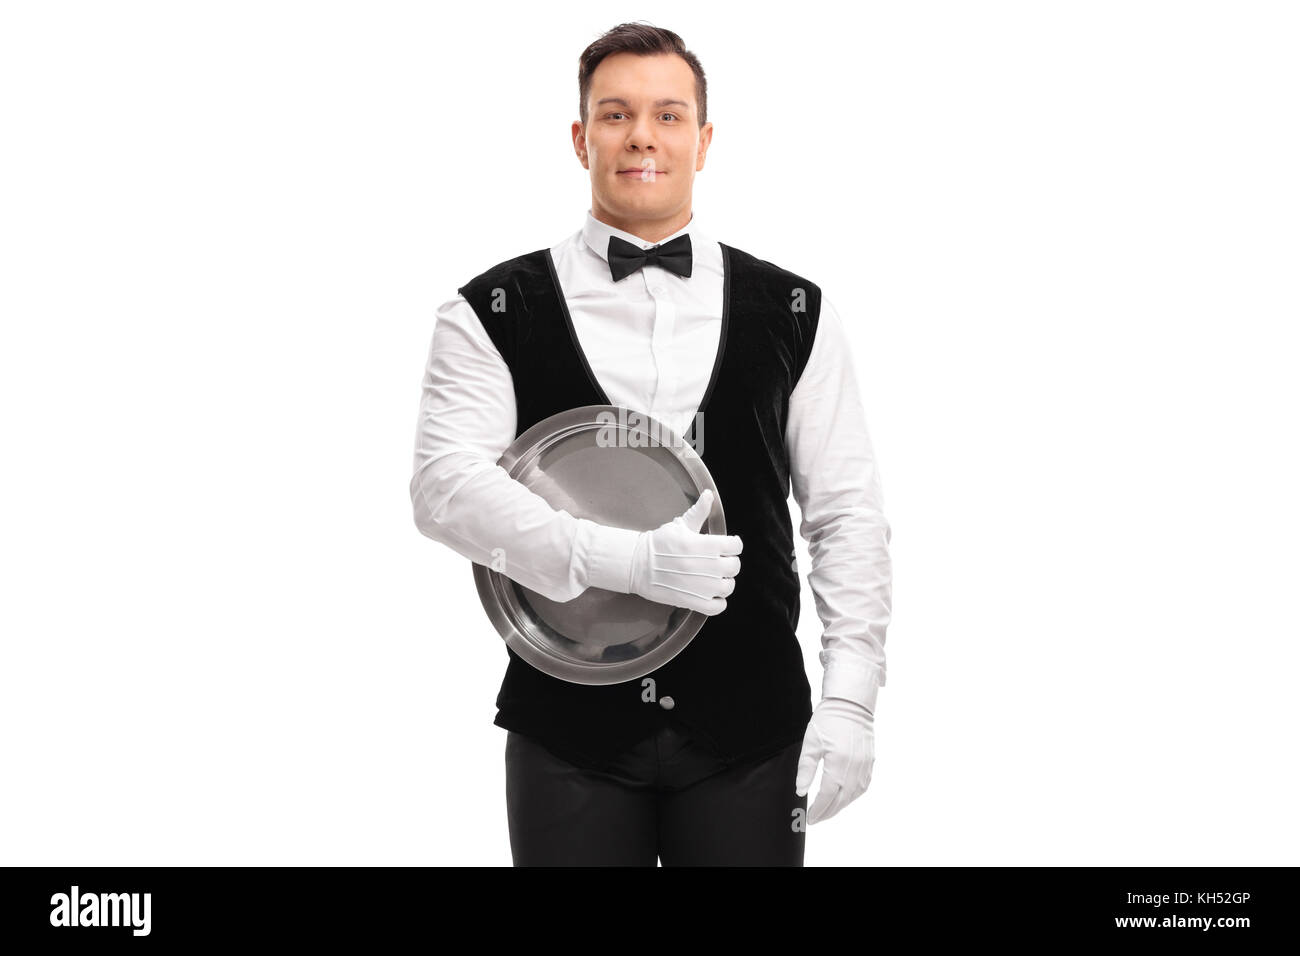 Waiter holding a tray isolated on white background Stock Photo